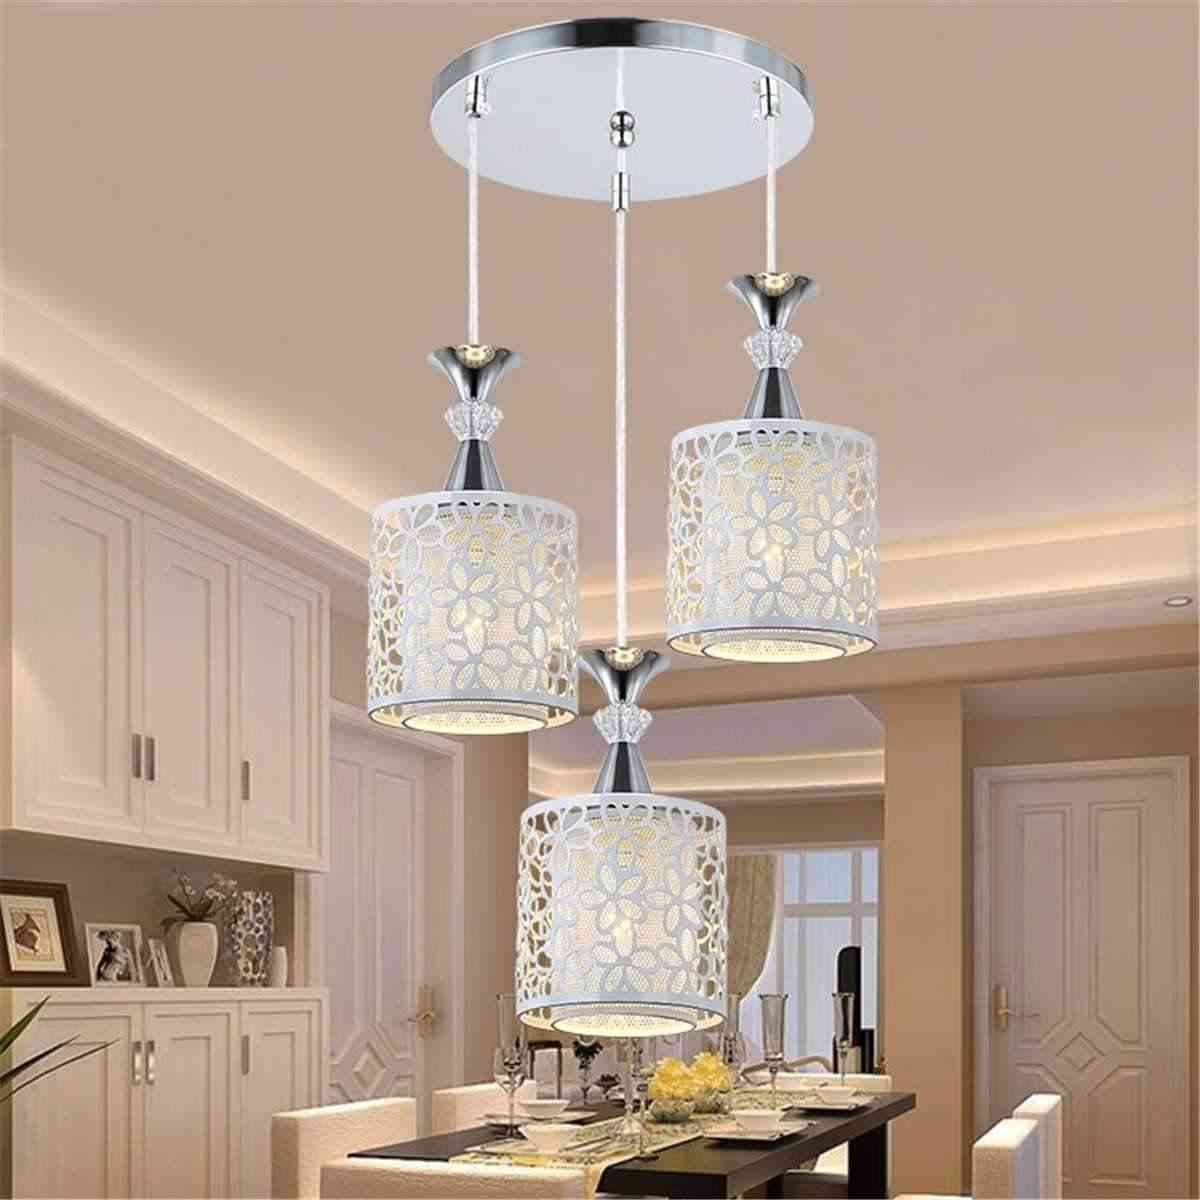 Moderne kristallen plafondlampen - led-lampen